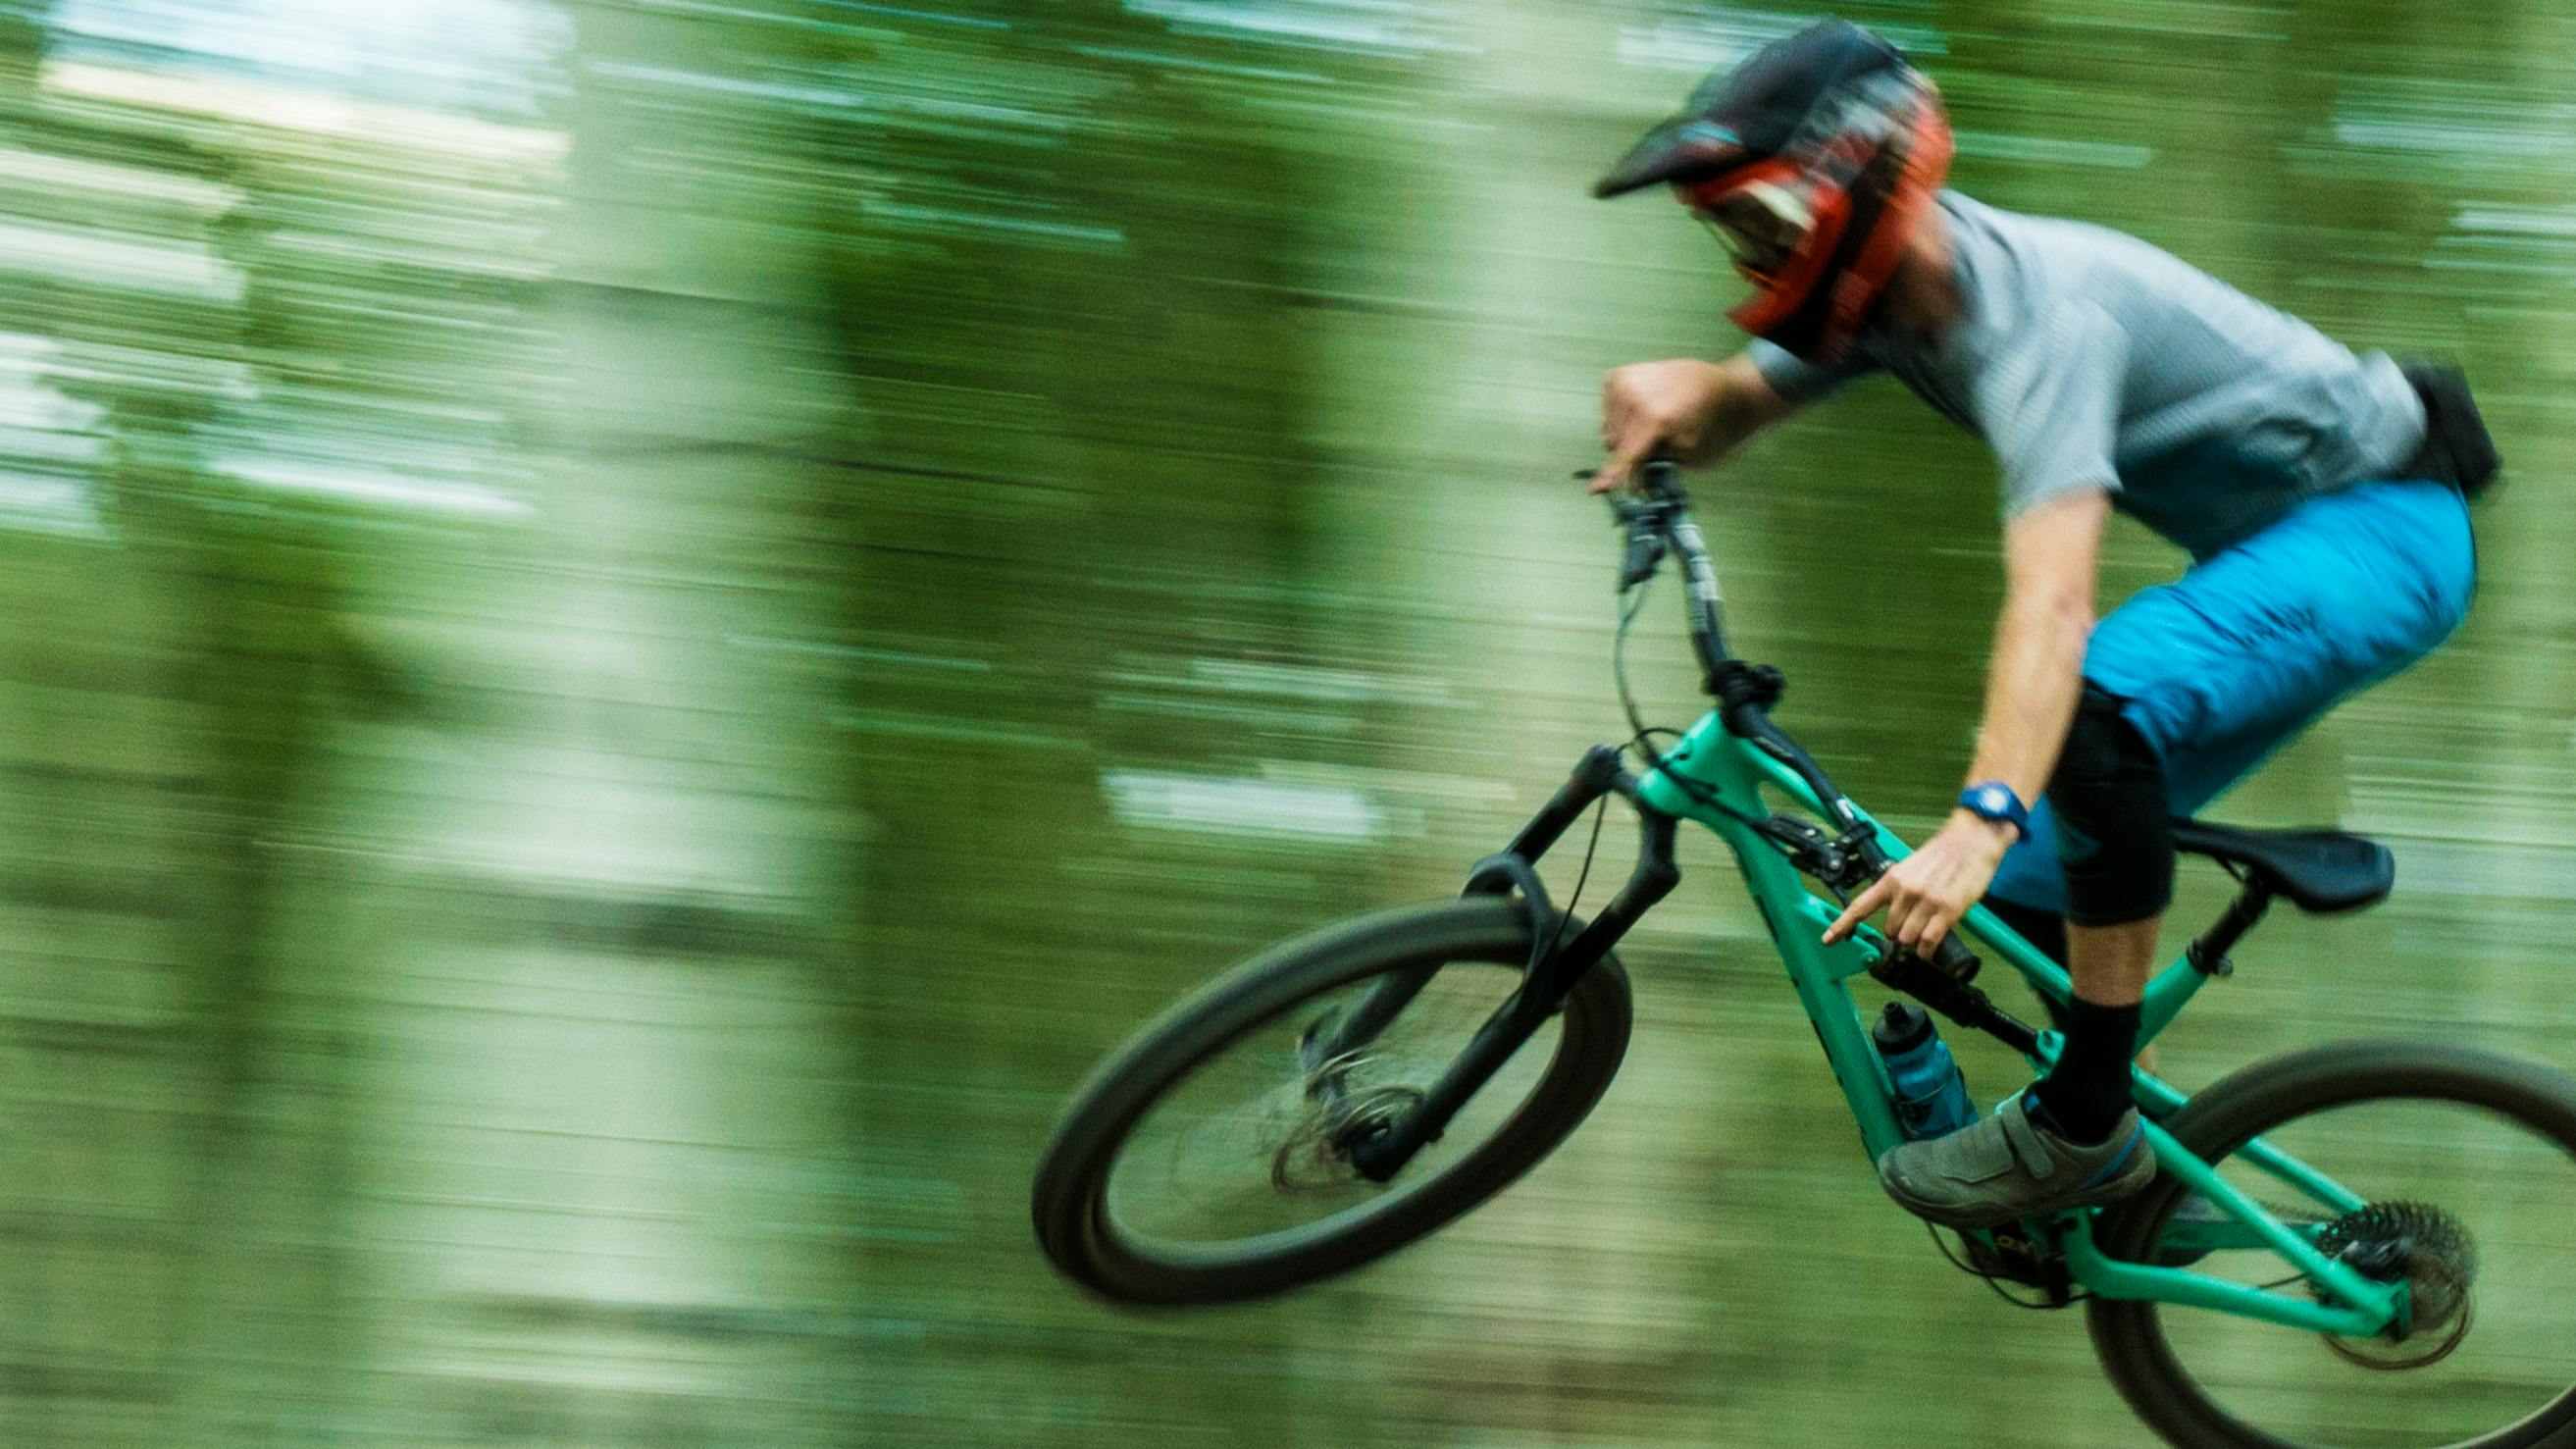 Man on mountain biking flying through the air, the green forest a blur behind him.